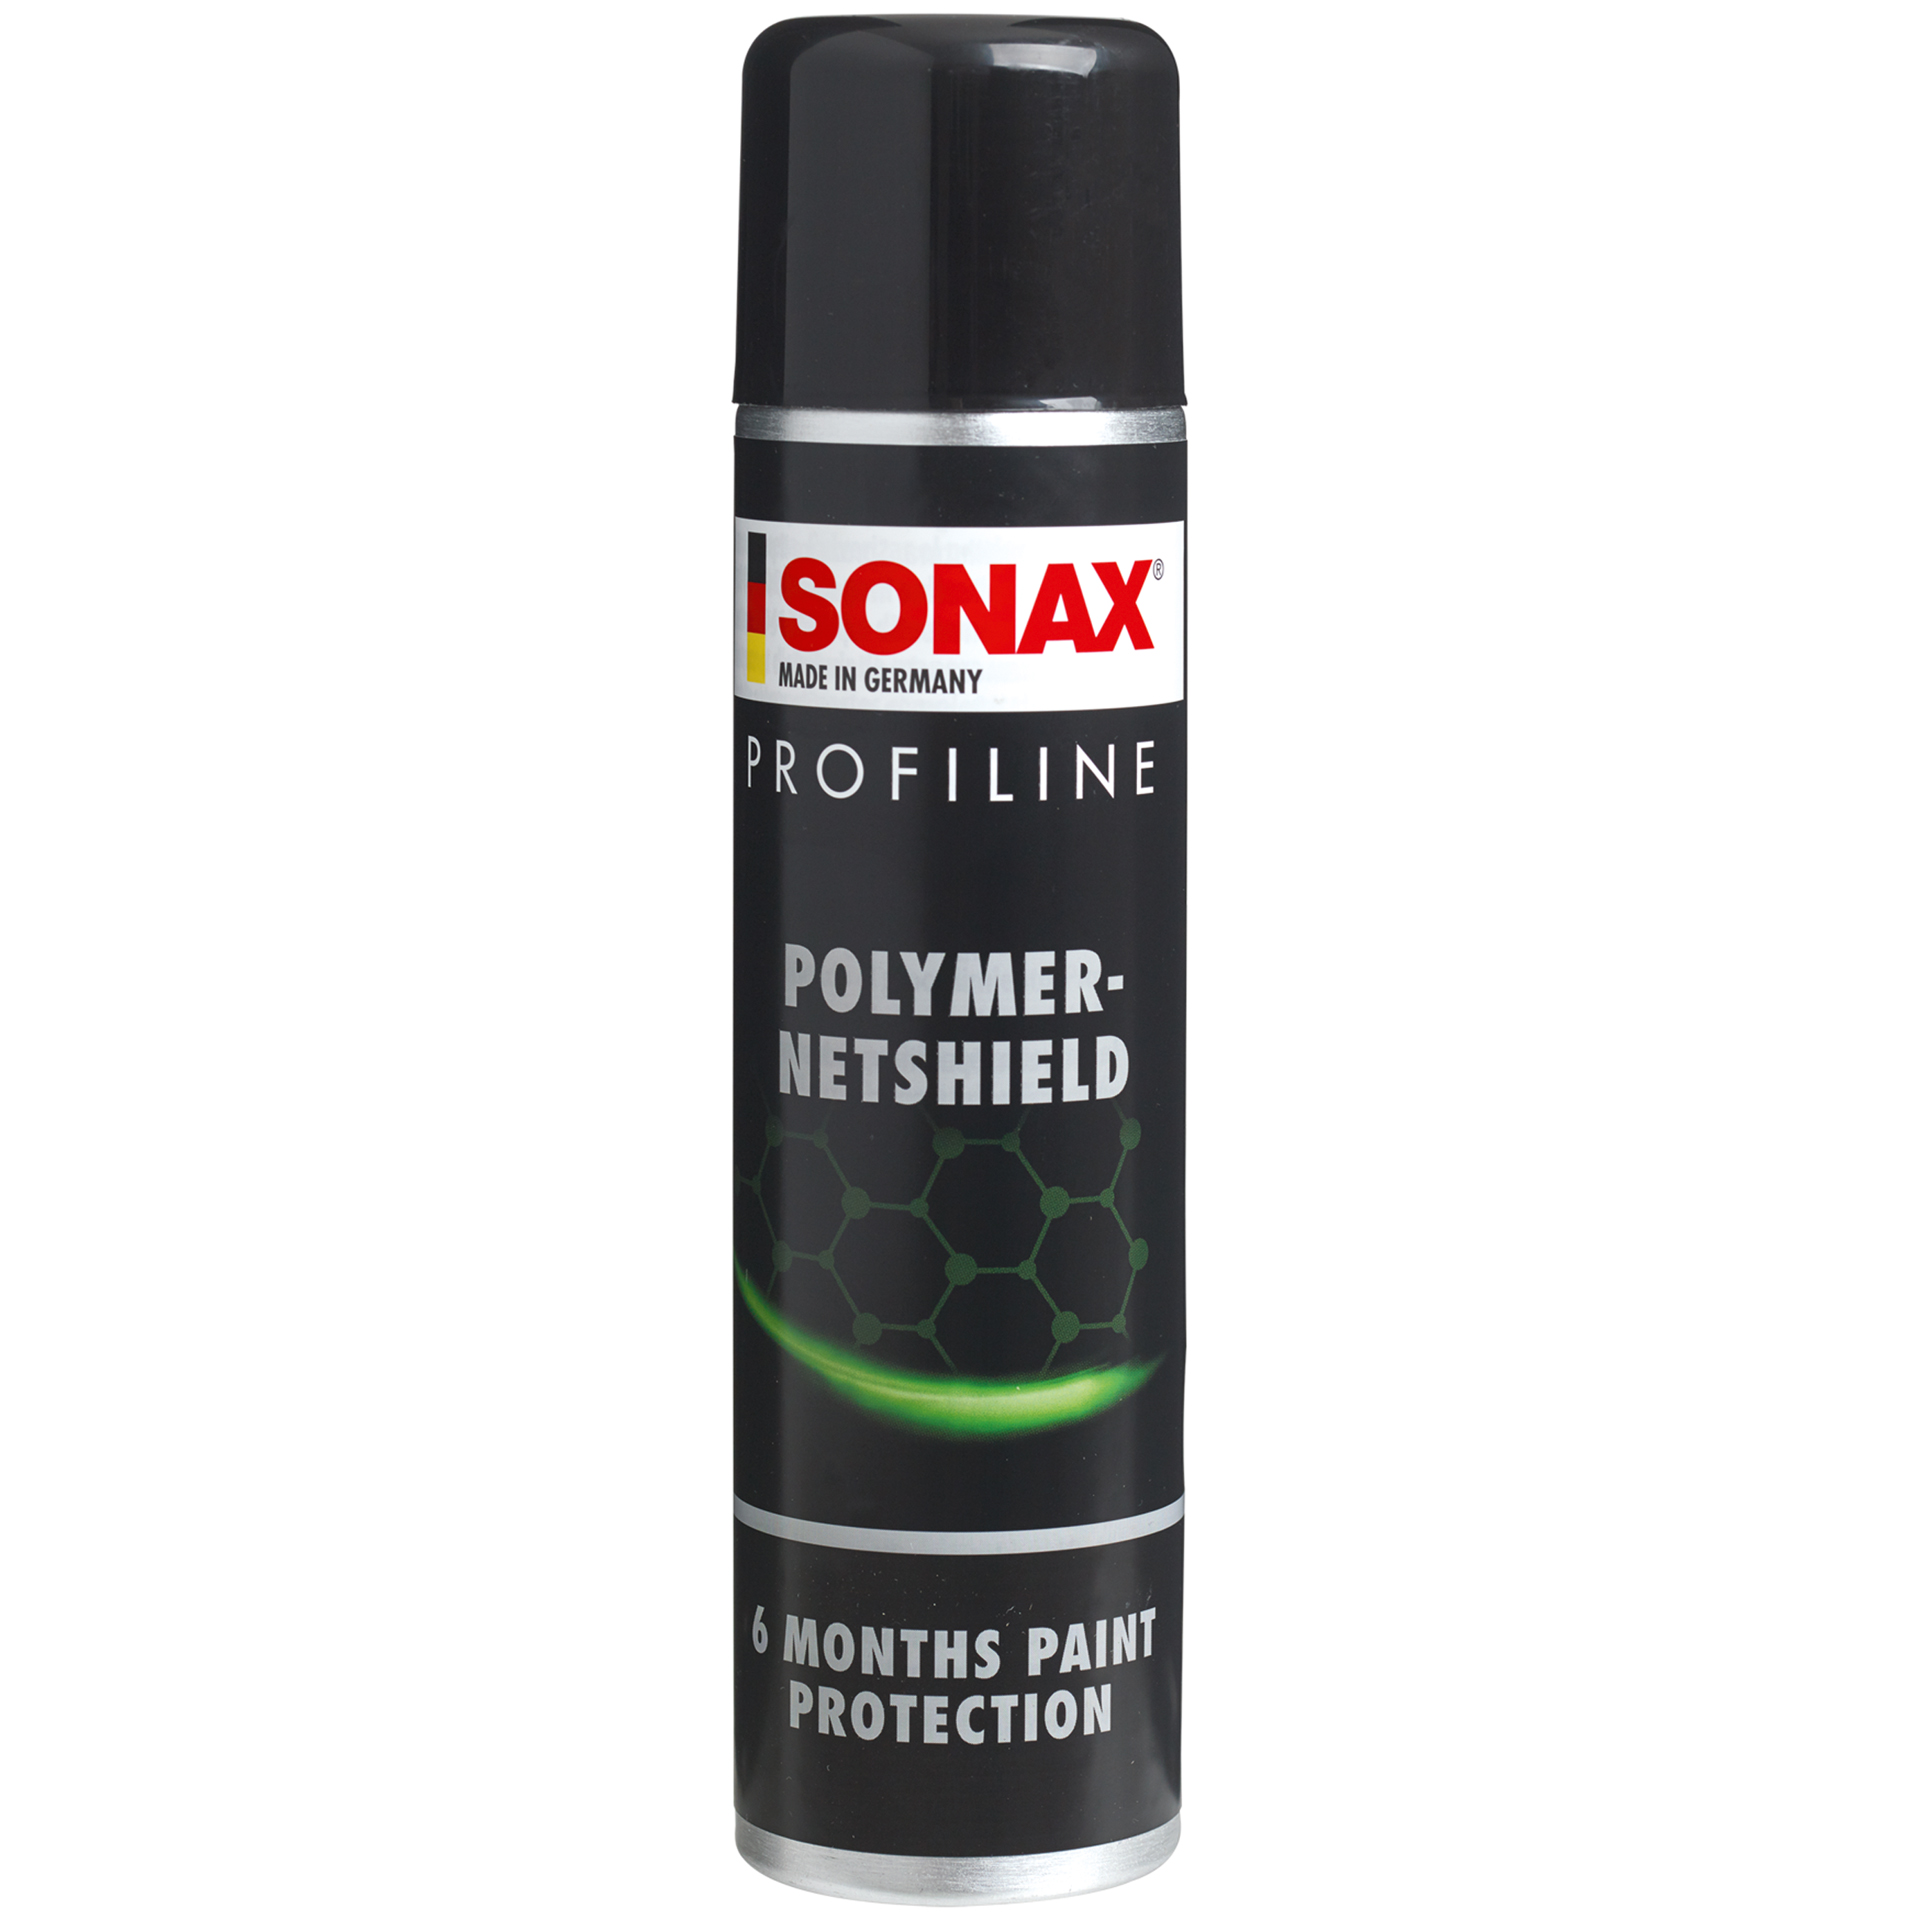 Sonax Profiline Polymer Net Shield (1837867)